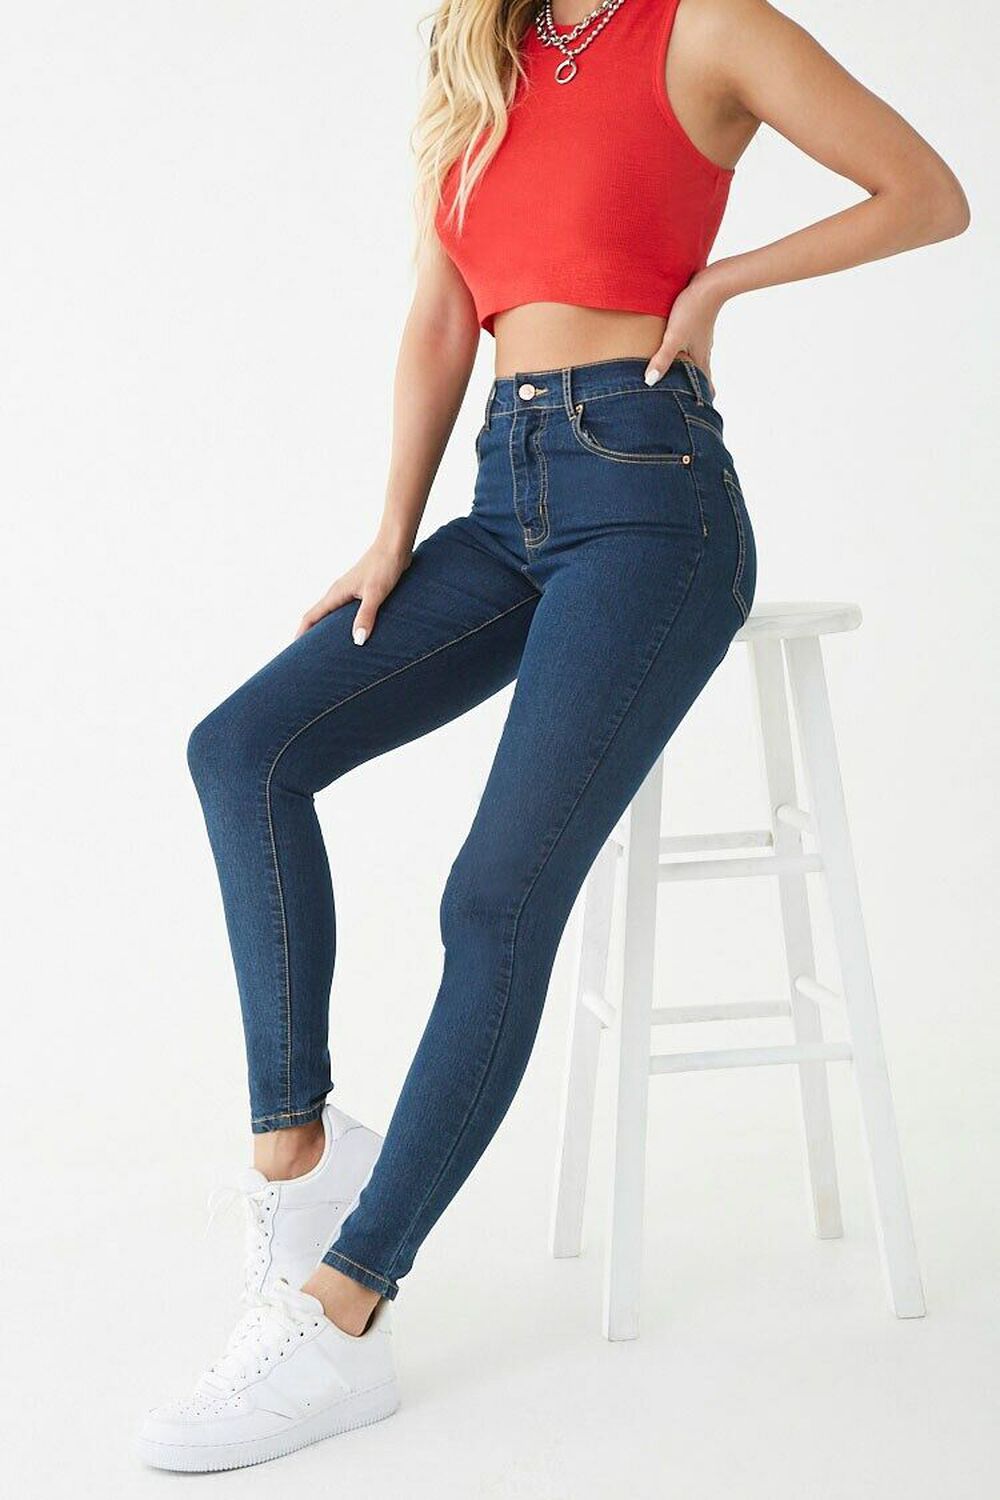 Stretch High-Waist Skinny Jeans, image 1